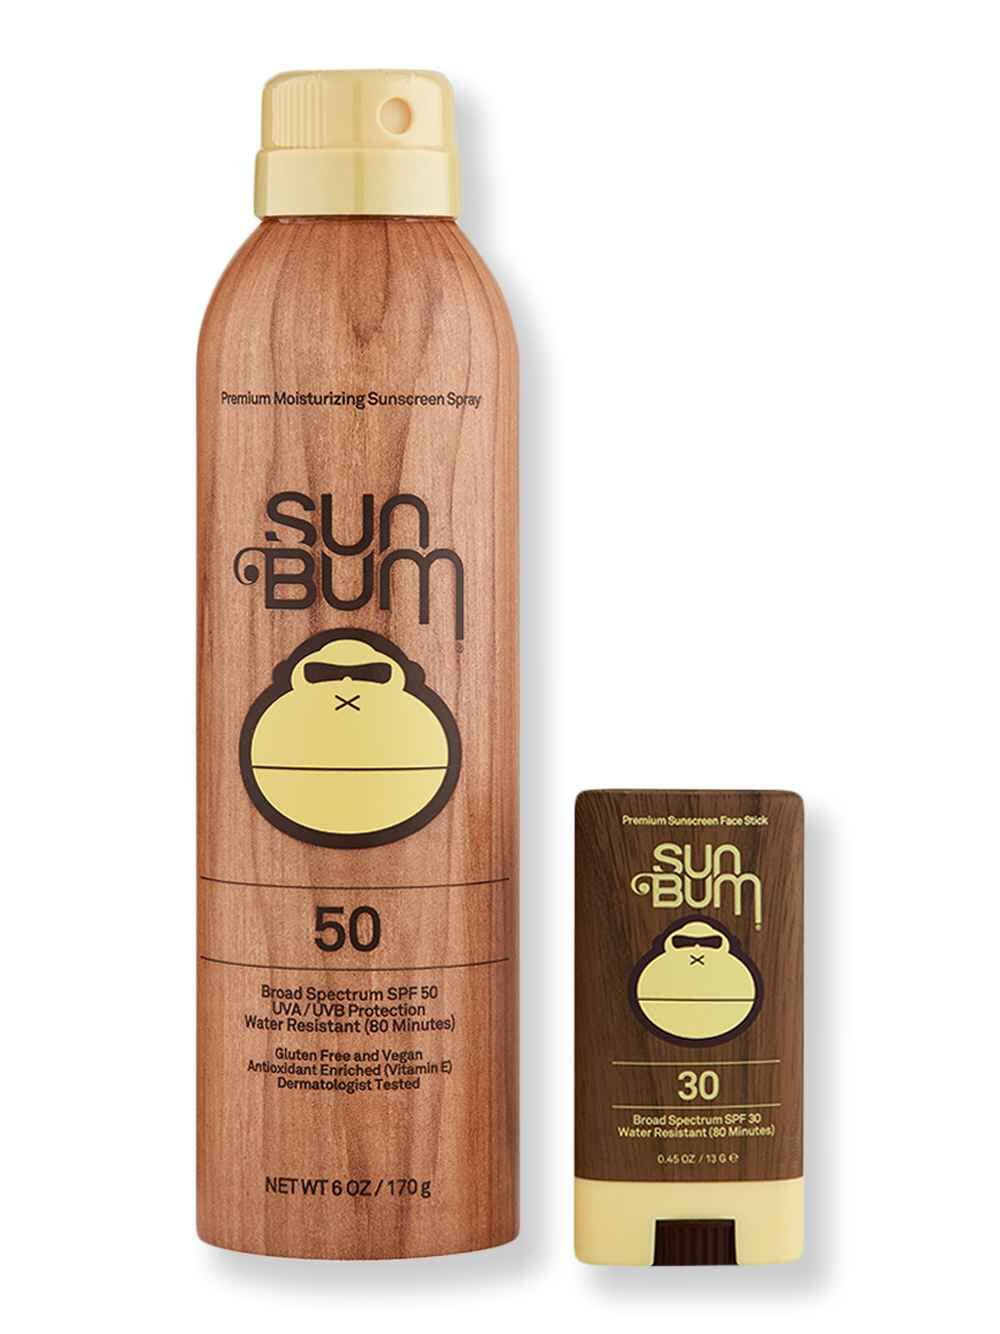 Sun Bum Sun Bum SPF 50 Sunscreen Spray 6 oz & SPF 30 Sunscreen Face Stick 0.45 oz Body Sunscreens 